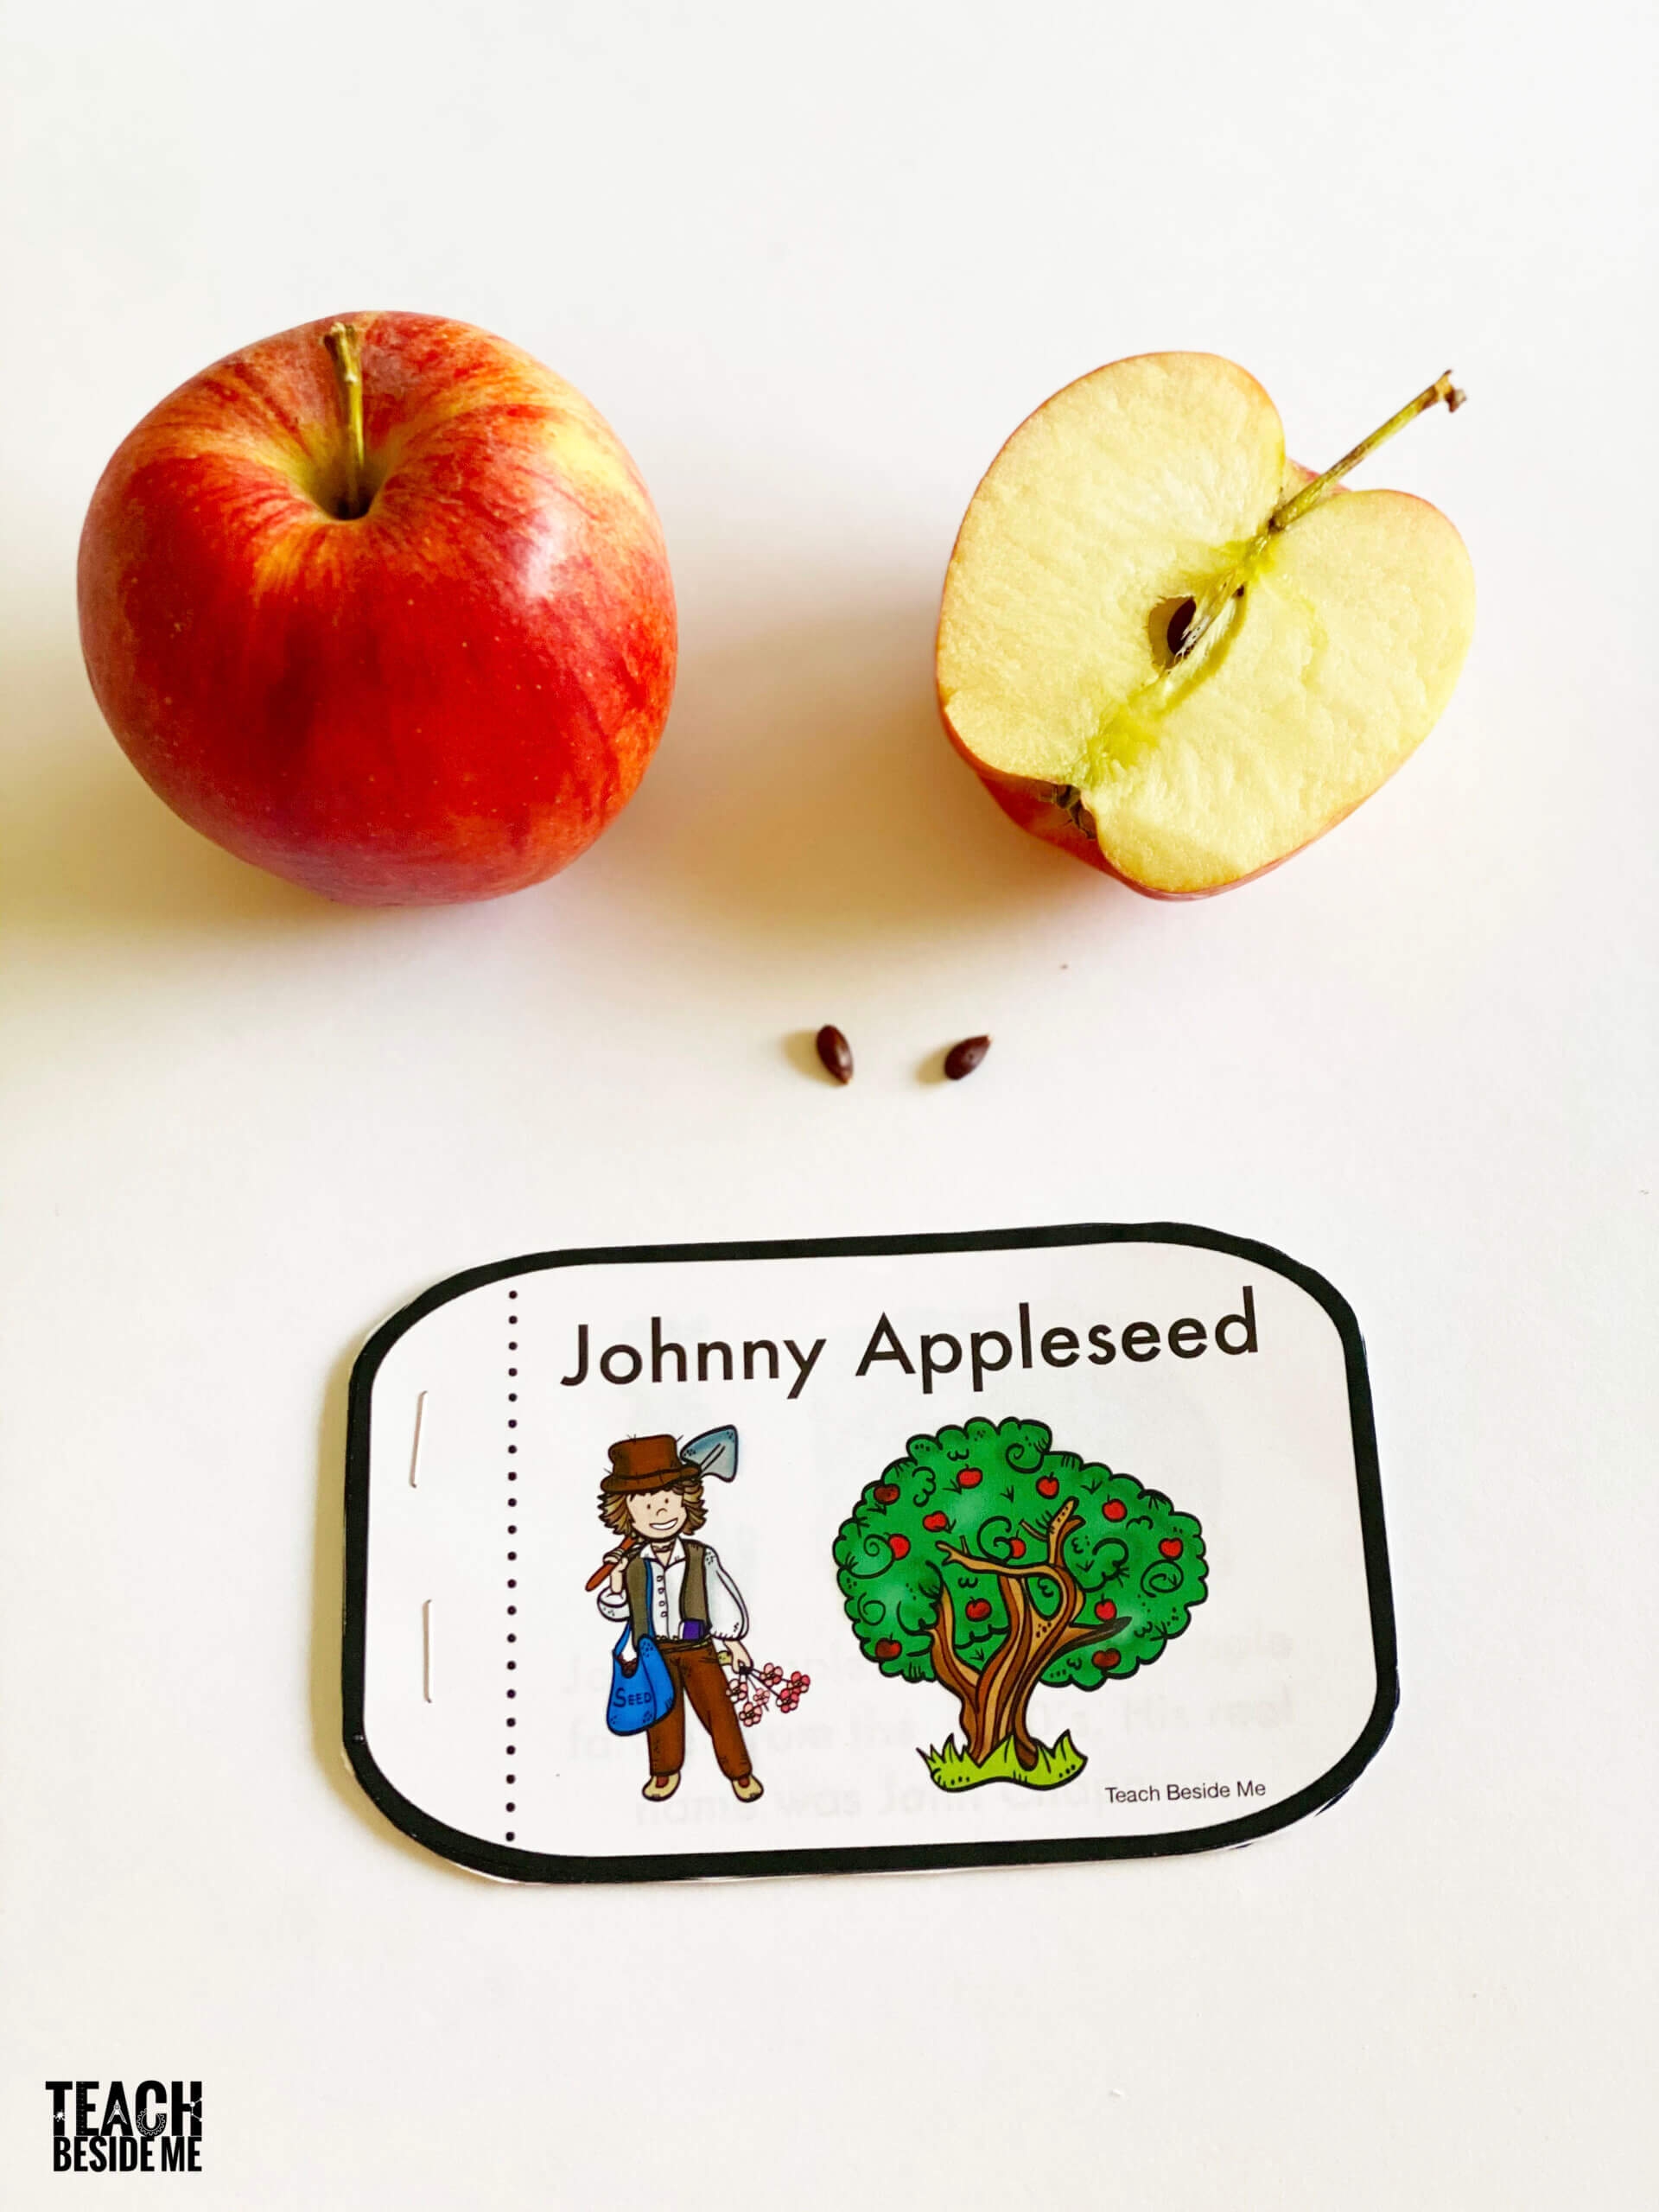 Johnny Appleseed Printable Story